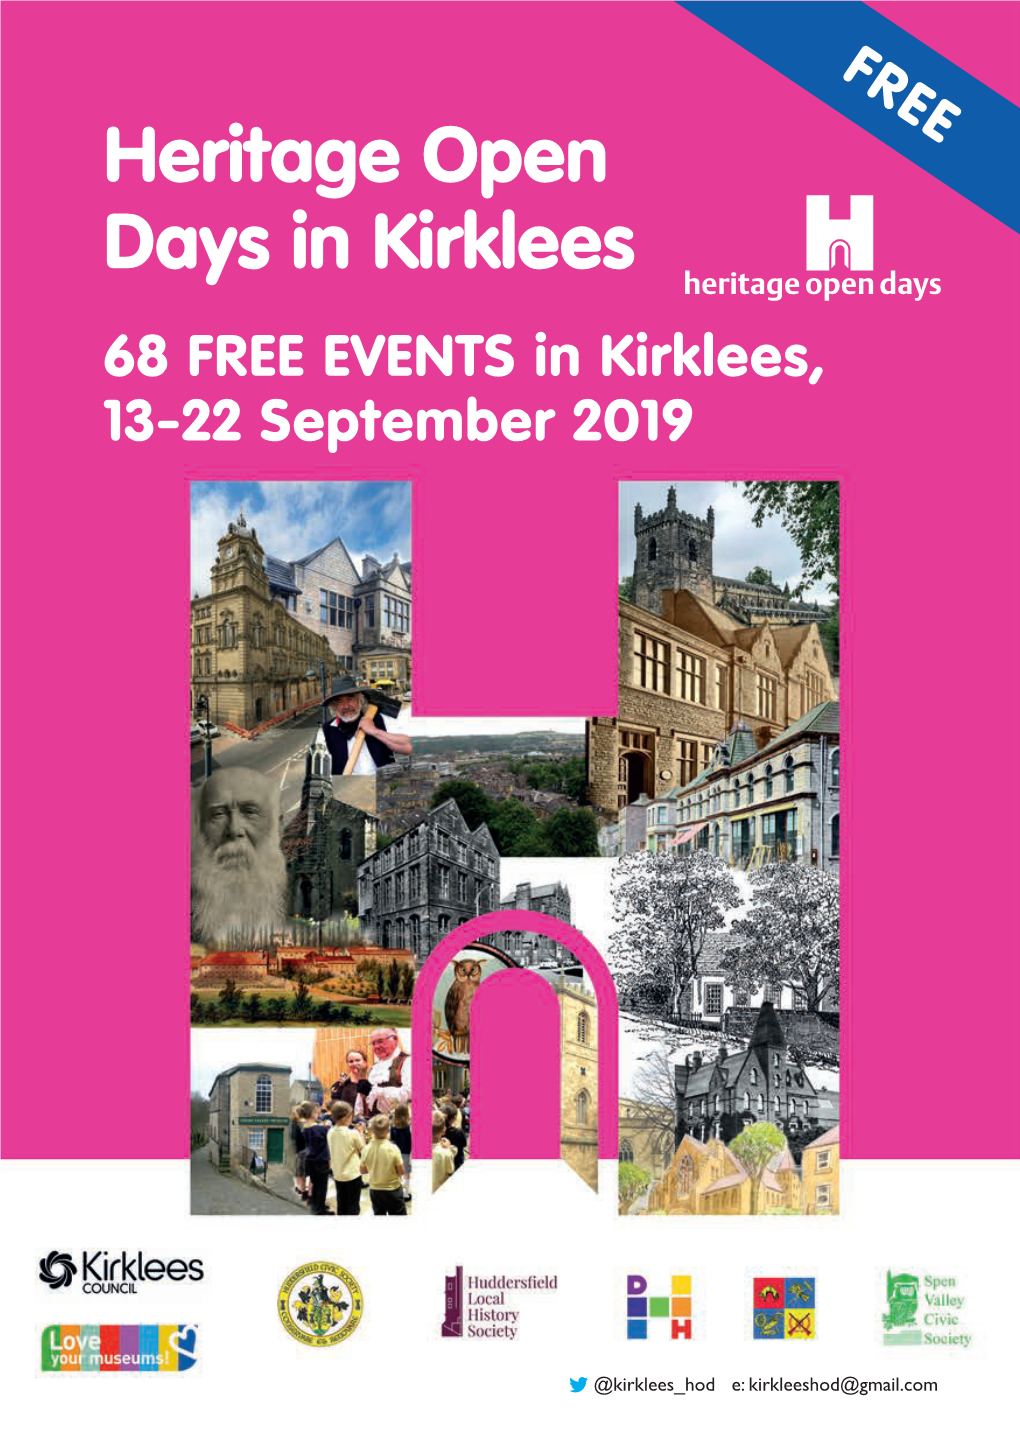 Heritage Open Days in Kirklees 68 FREE EVENTS in Kirklees, 13-22 September 2019